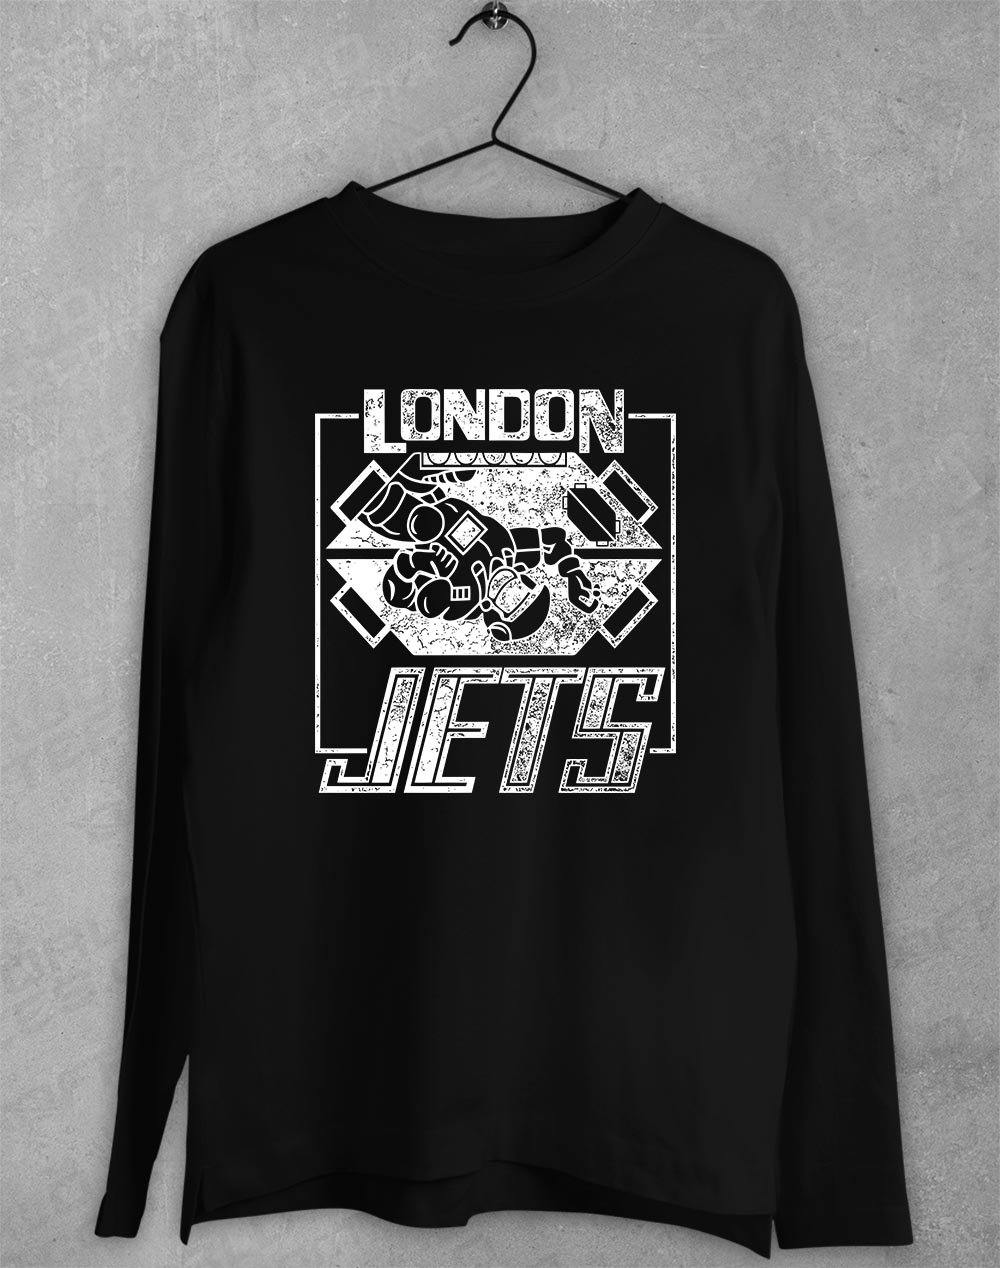 London Jets Long Sleeve T-Shirt S / Black  - Off World Tees